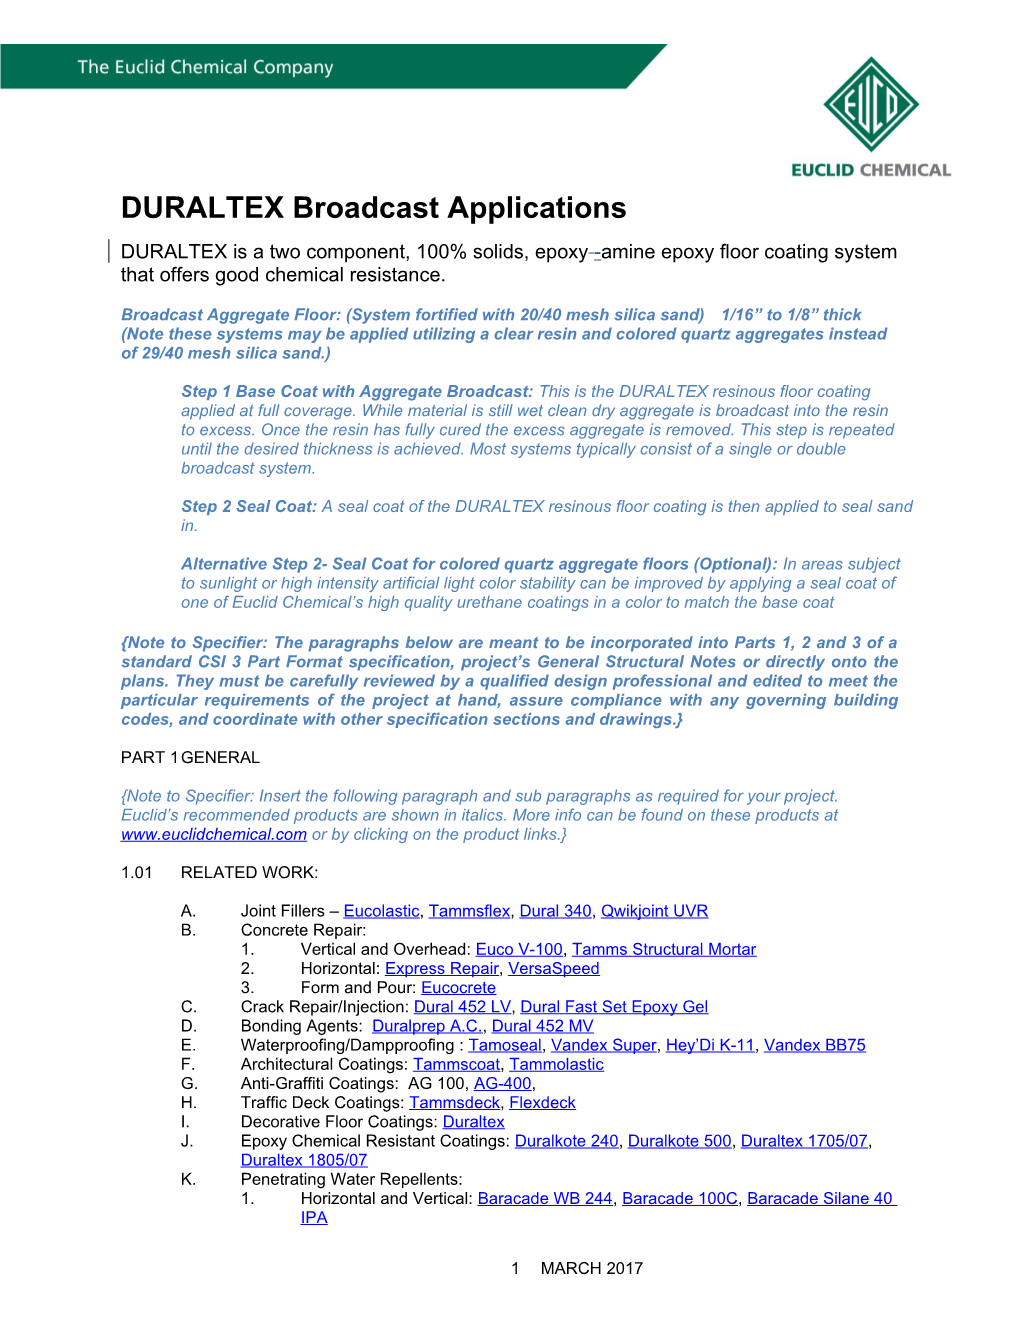 DURALTEX Broadcast Applications